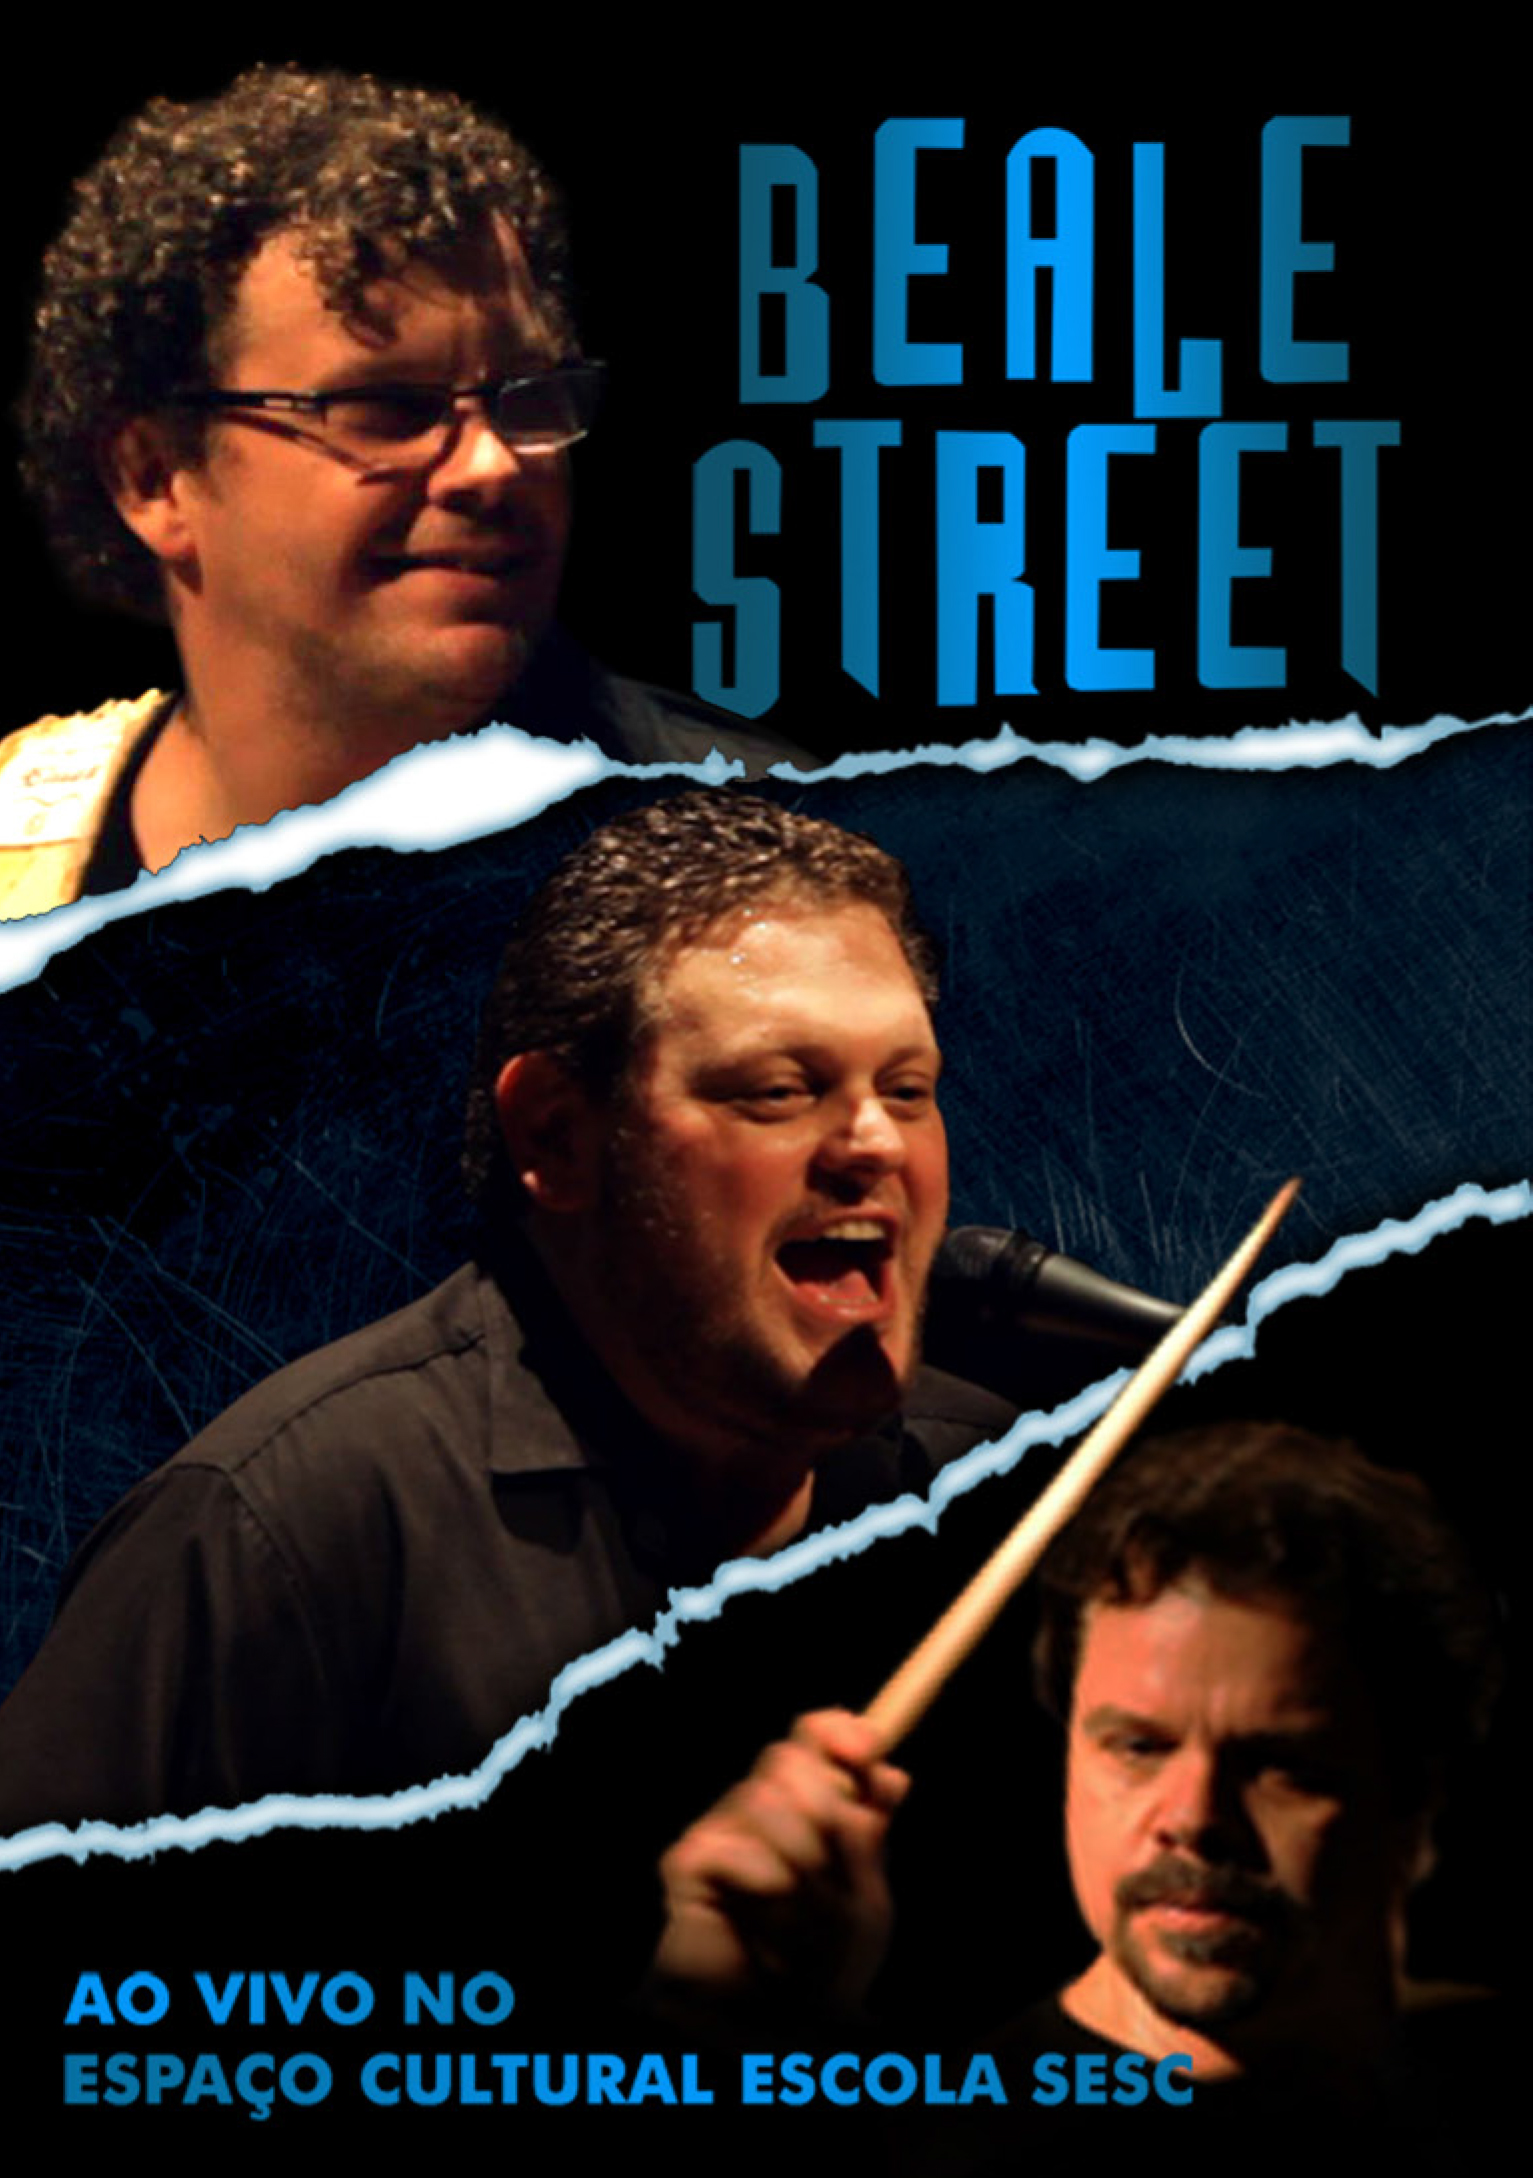 CAPA DVD BEALE STREET (2)